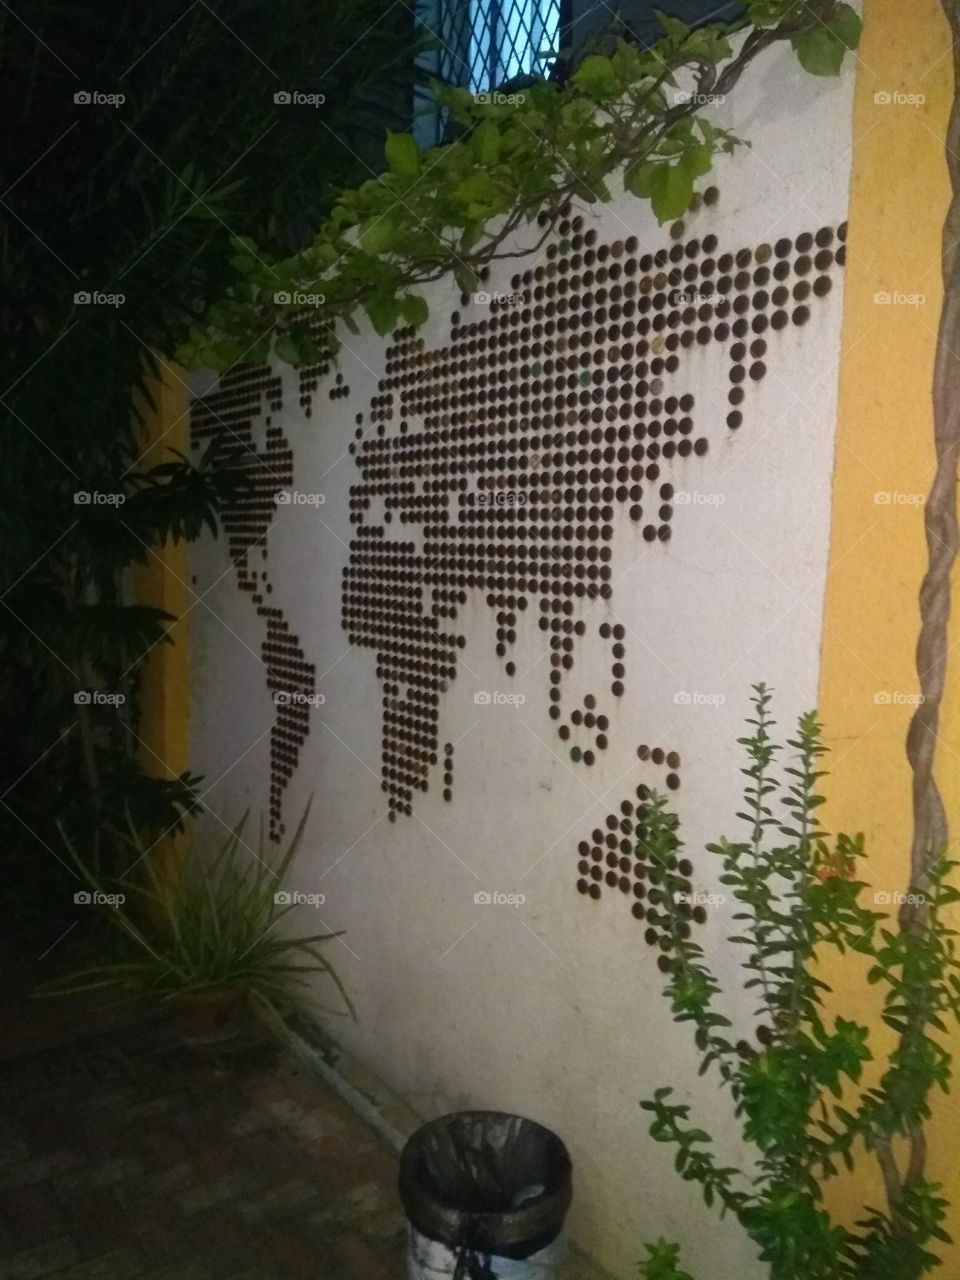 Mapa mundi feito de tampinhas de garrafa